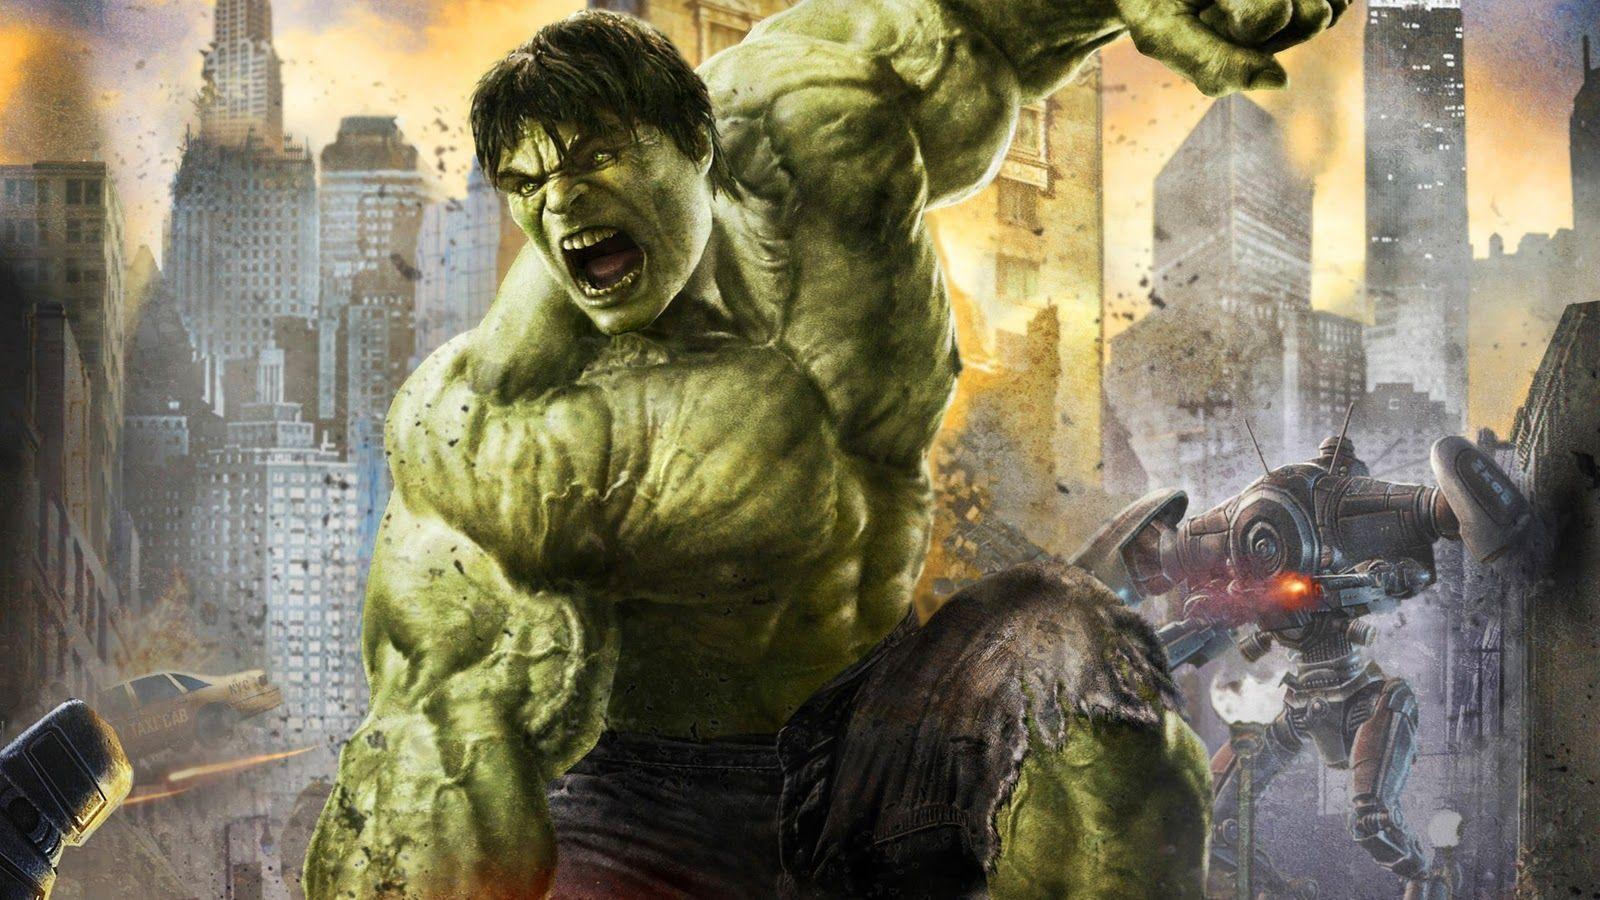 Hulk 2 Wallpaper, The Hulk Angry Wallpaper Background The Hulk